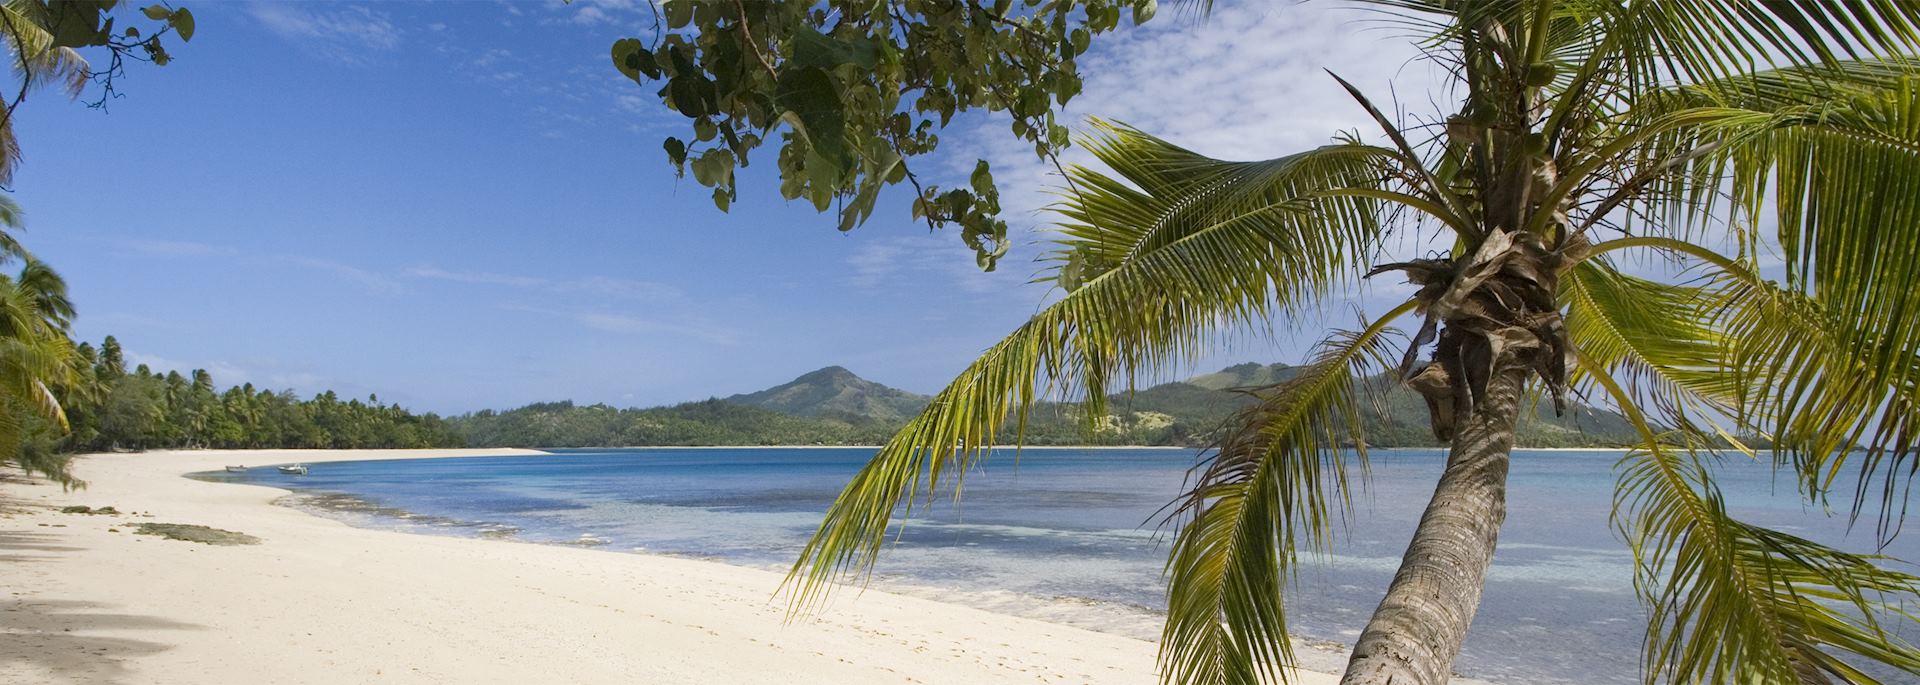 Deserted beach on Fiji